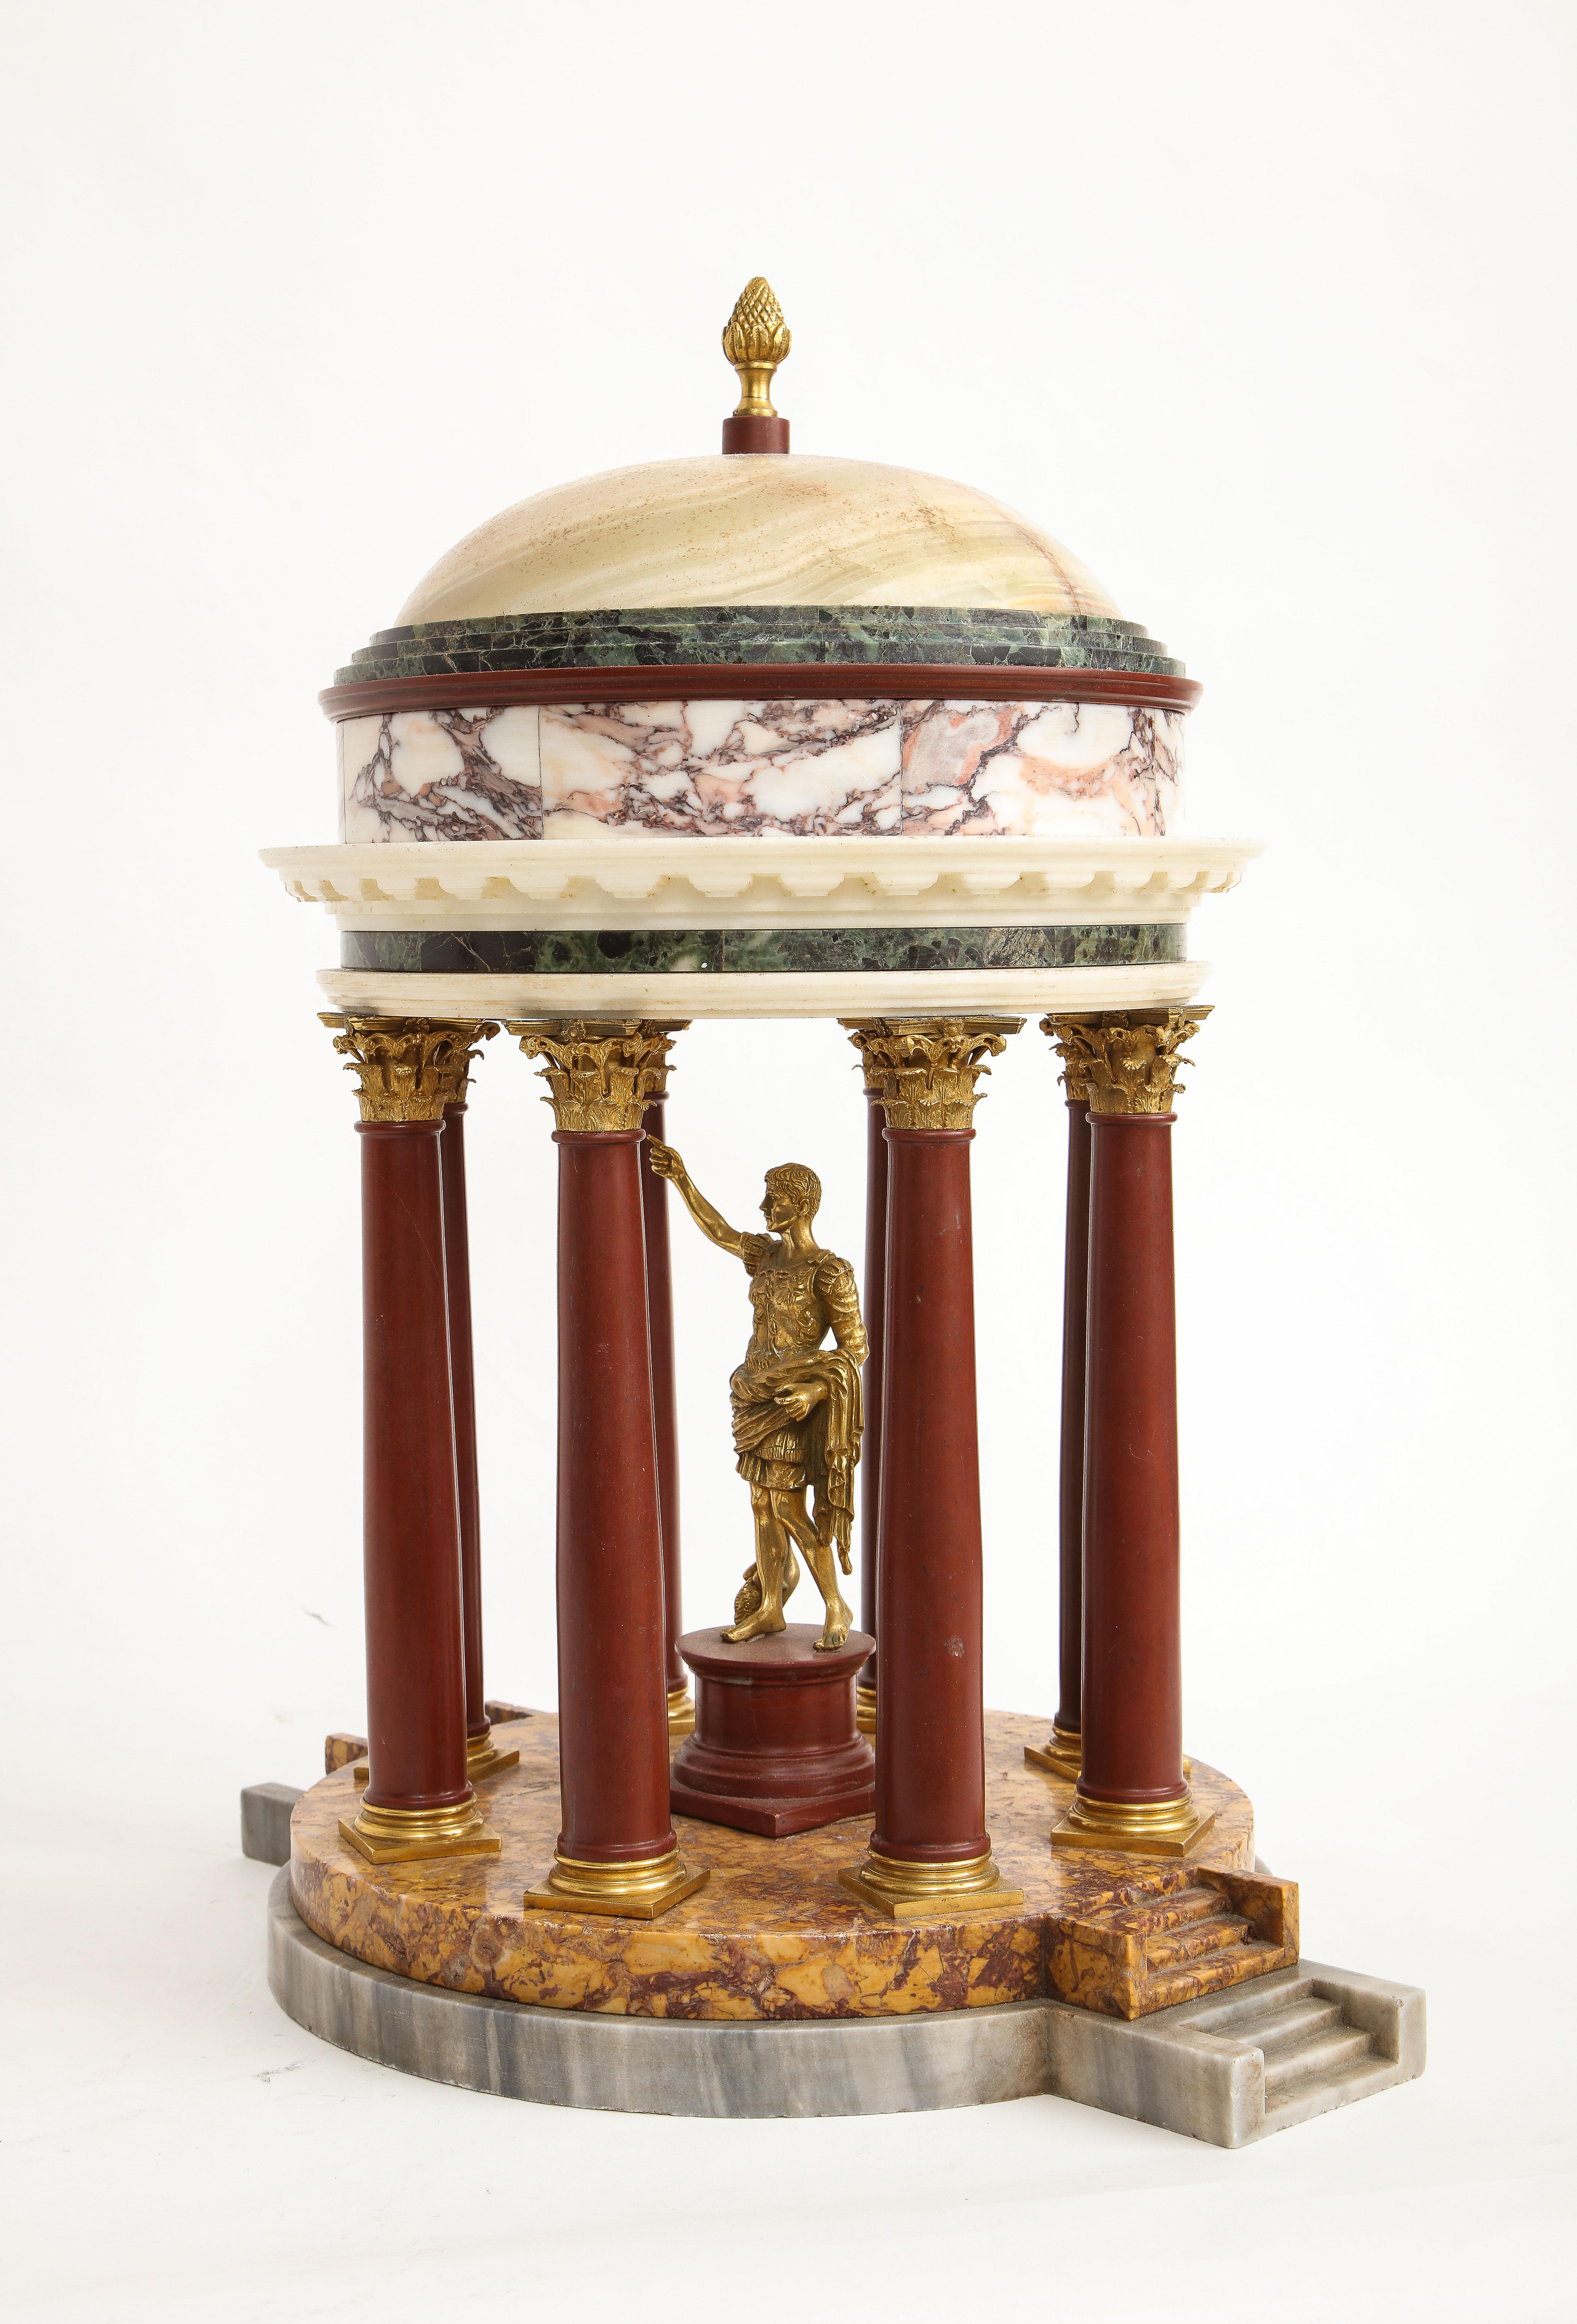 19th Century Italian Ormolu Mounted Multi-Marble Julius Caesar Coliseum Model In Good Condition For Sale In New York, NY